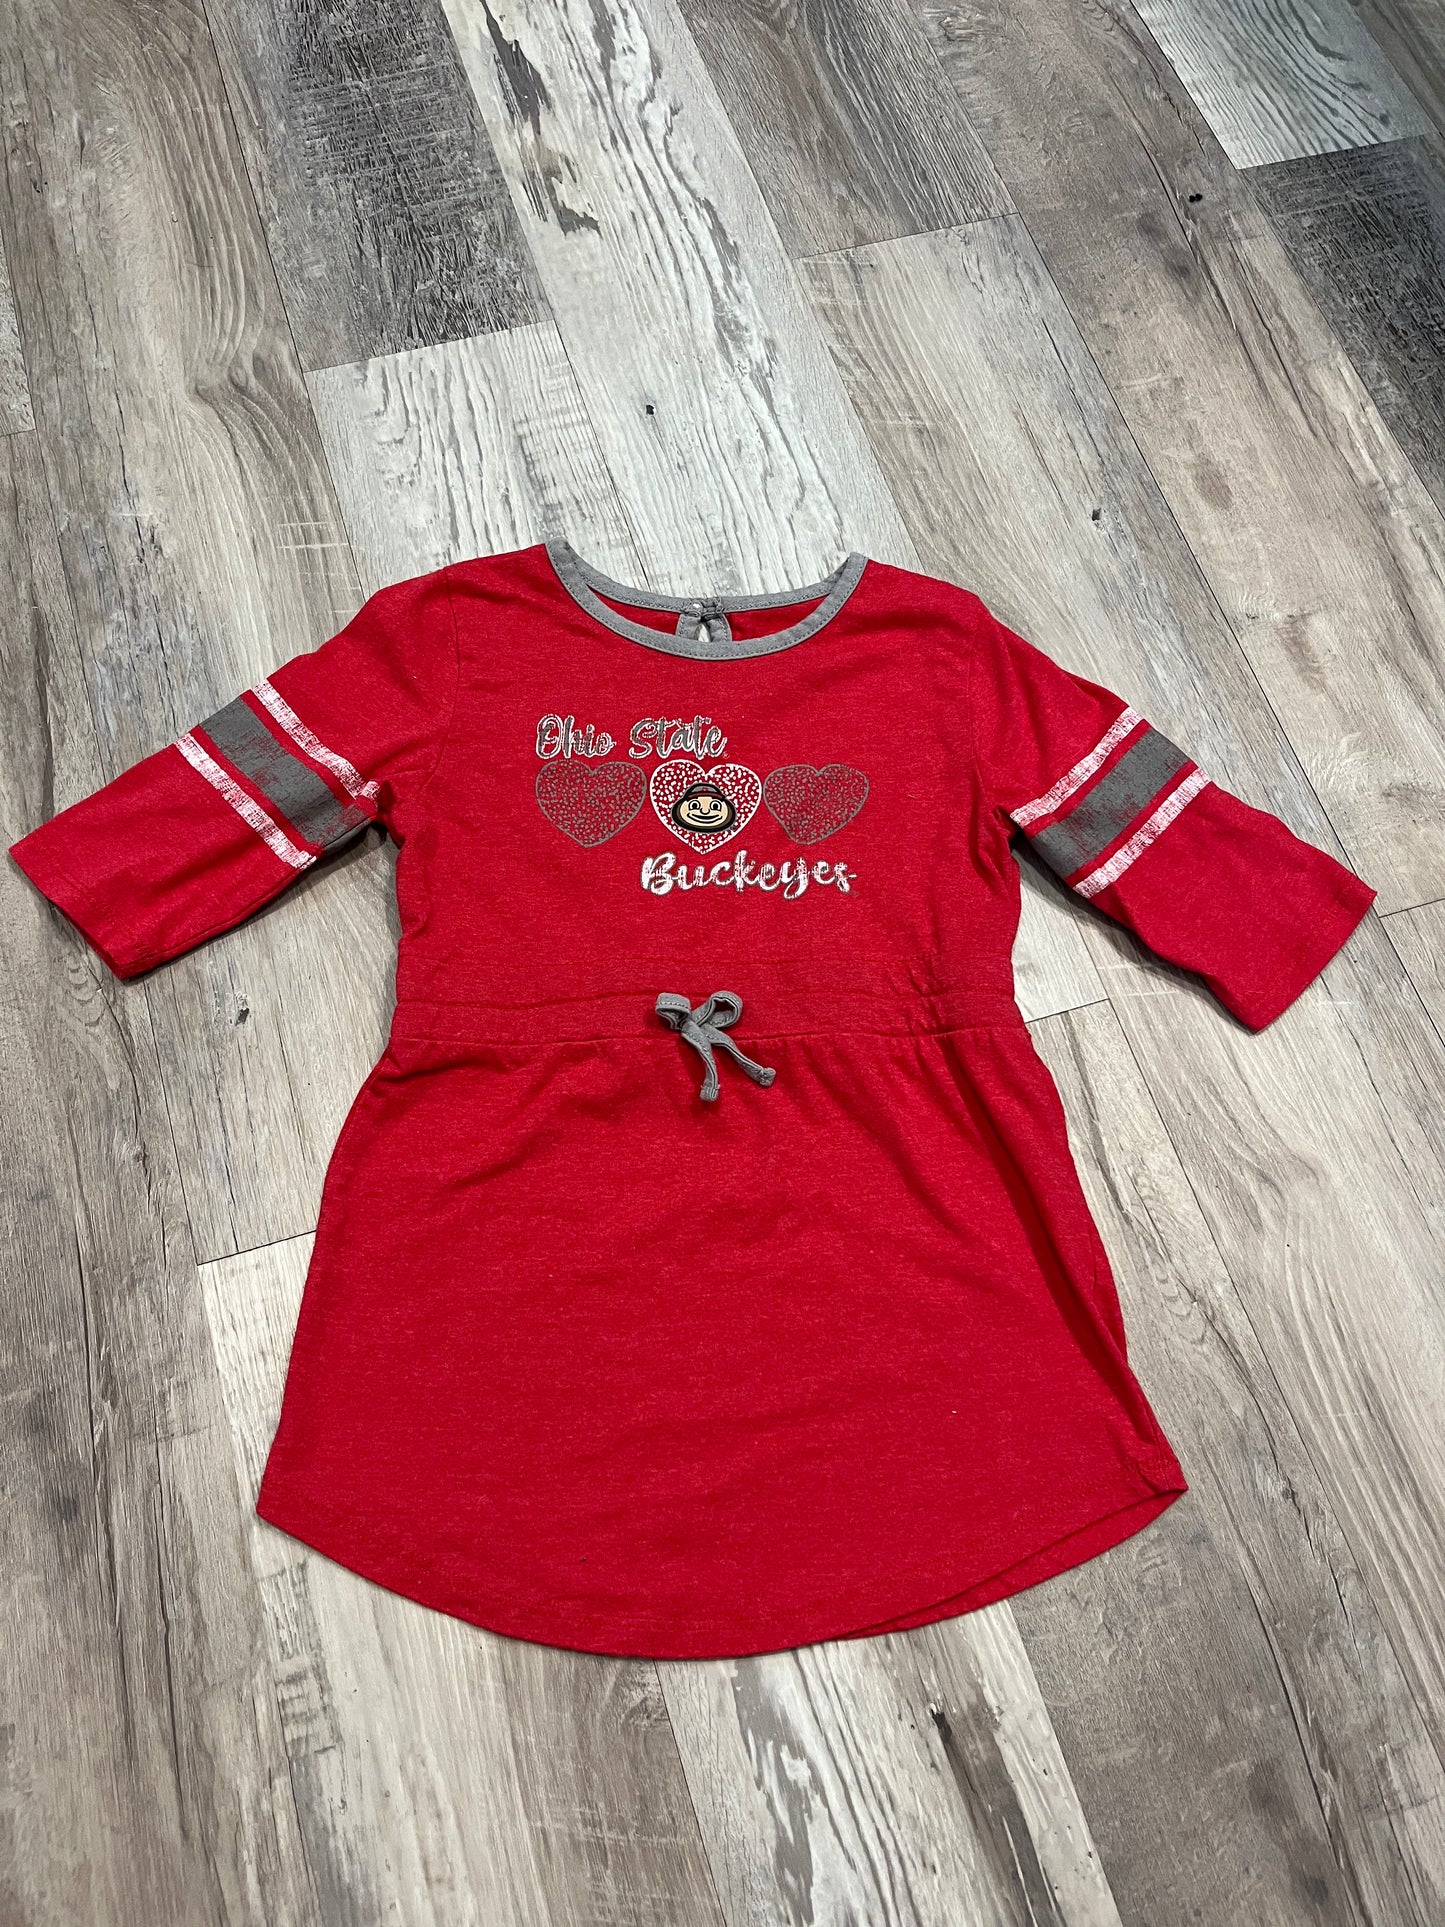 Girls Ohio State Buckeyes Dress Toddler Size 5T